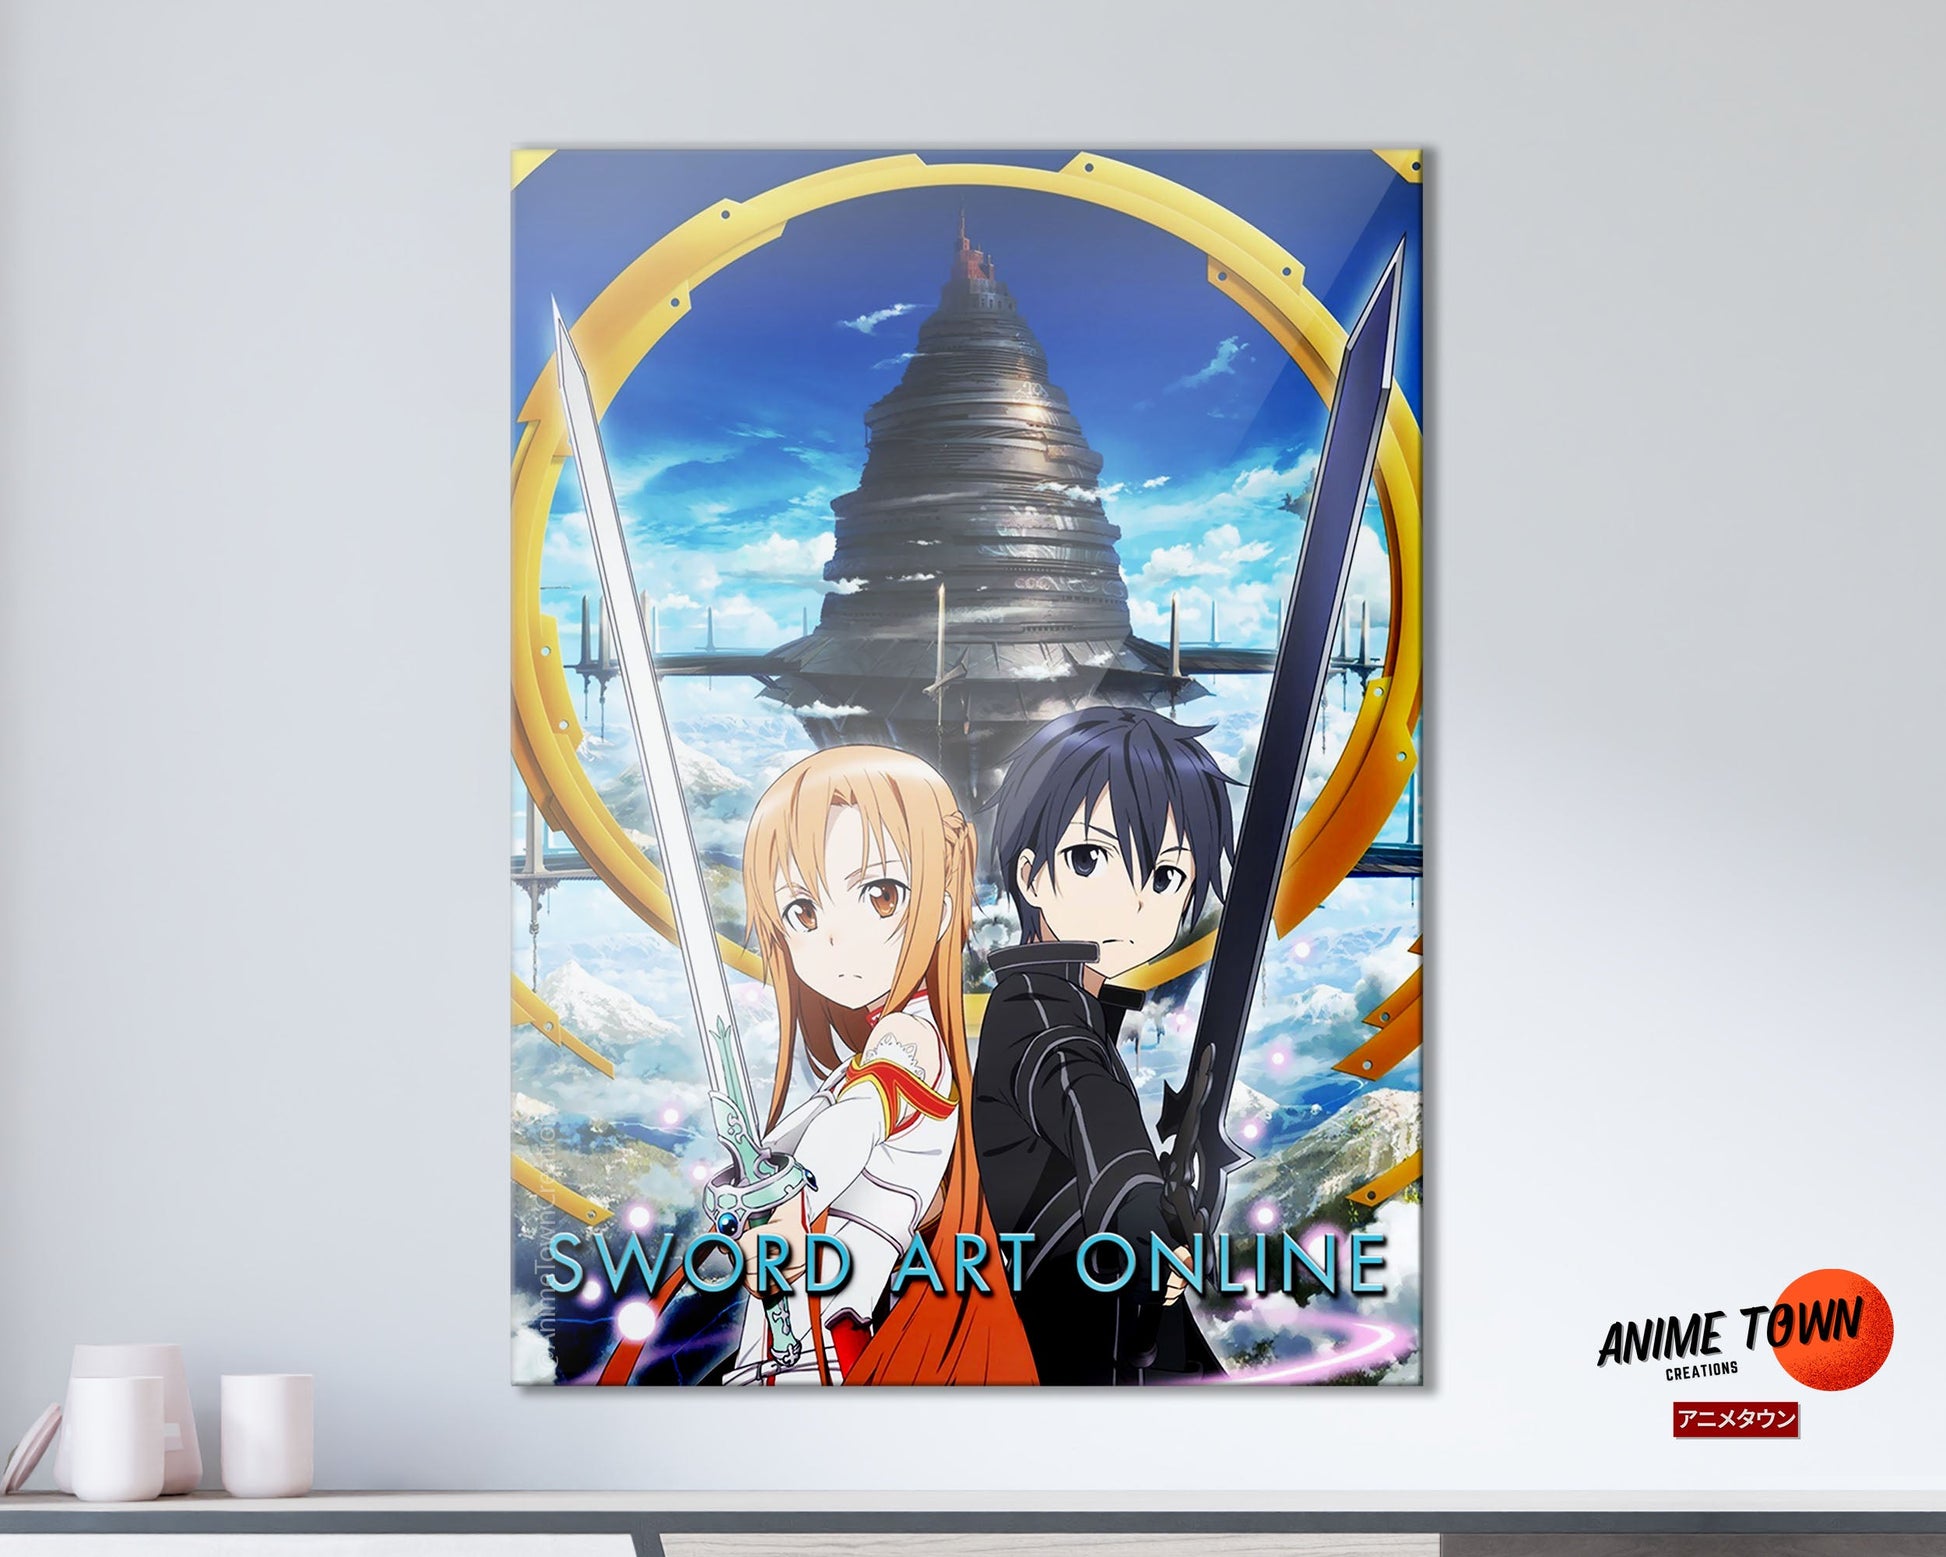 Manga Cover Posters Online - Shop Unique Metal Prints, Pictures, Paintings